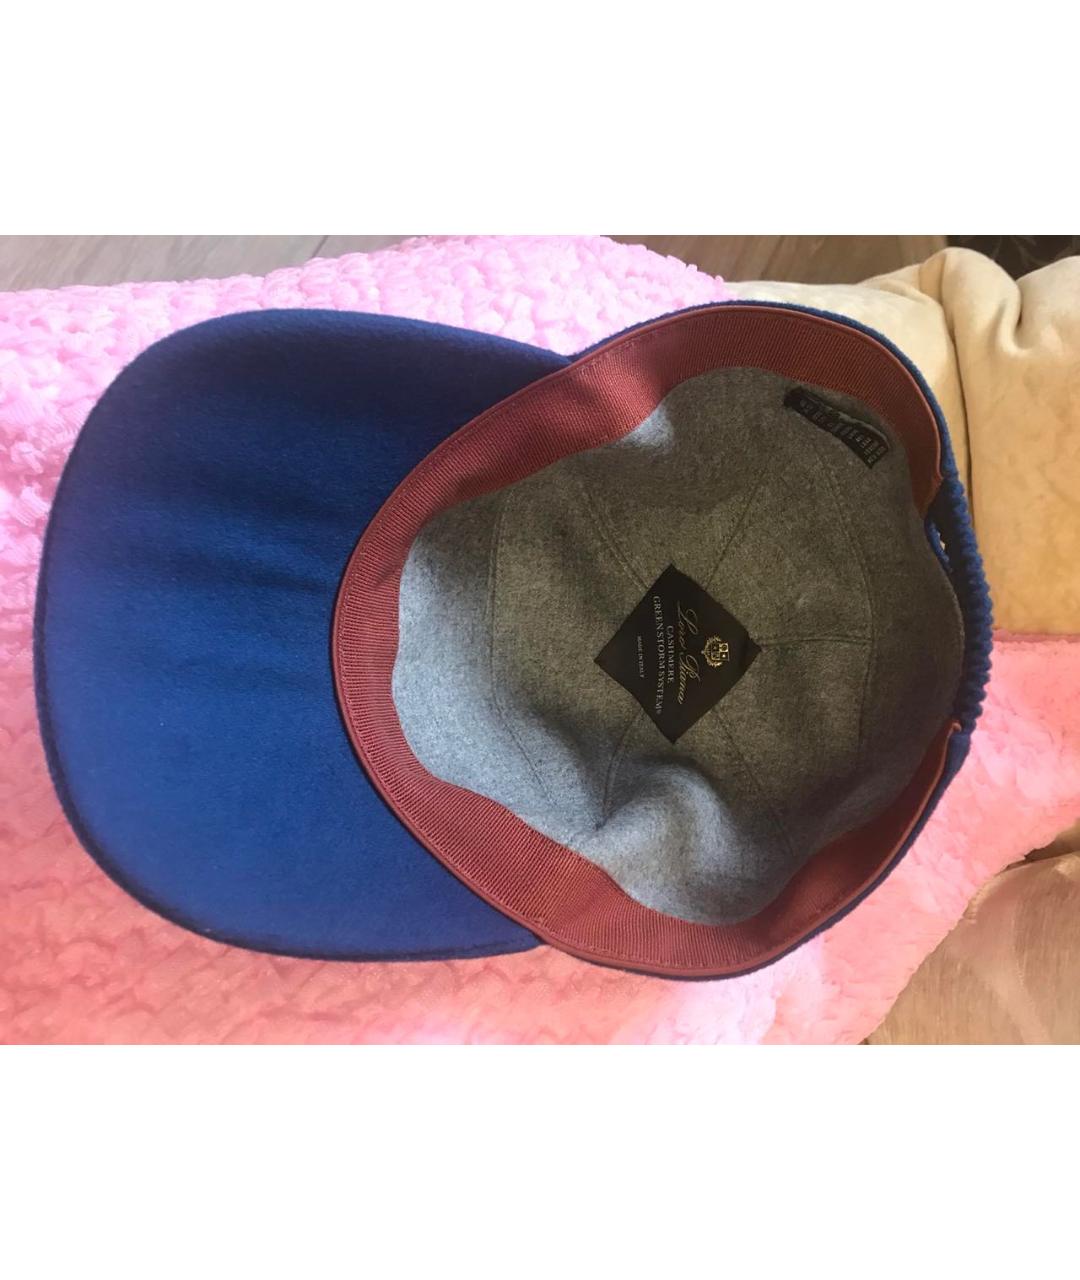 LORO PIANA Темно-синяя кашемировая кепка, фото 2